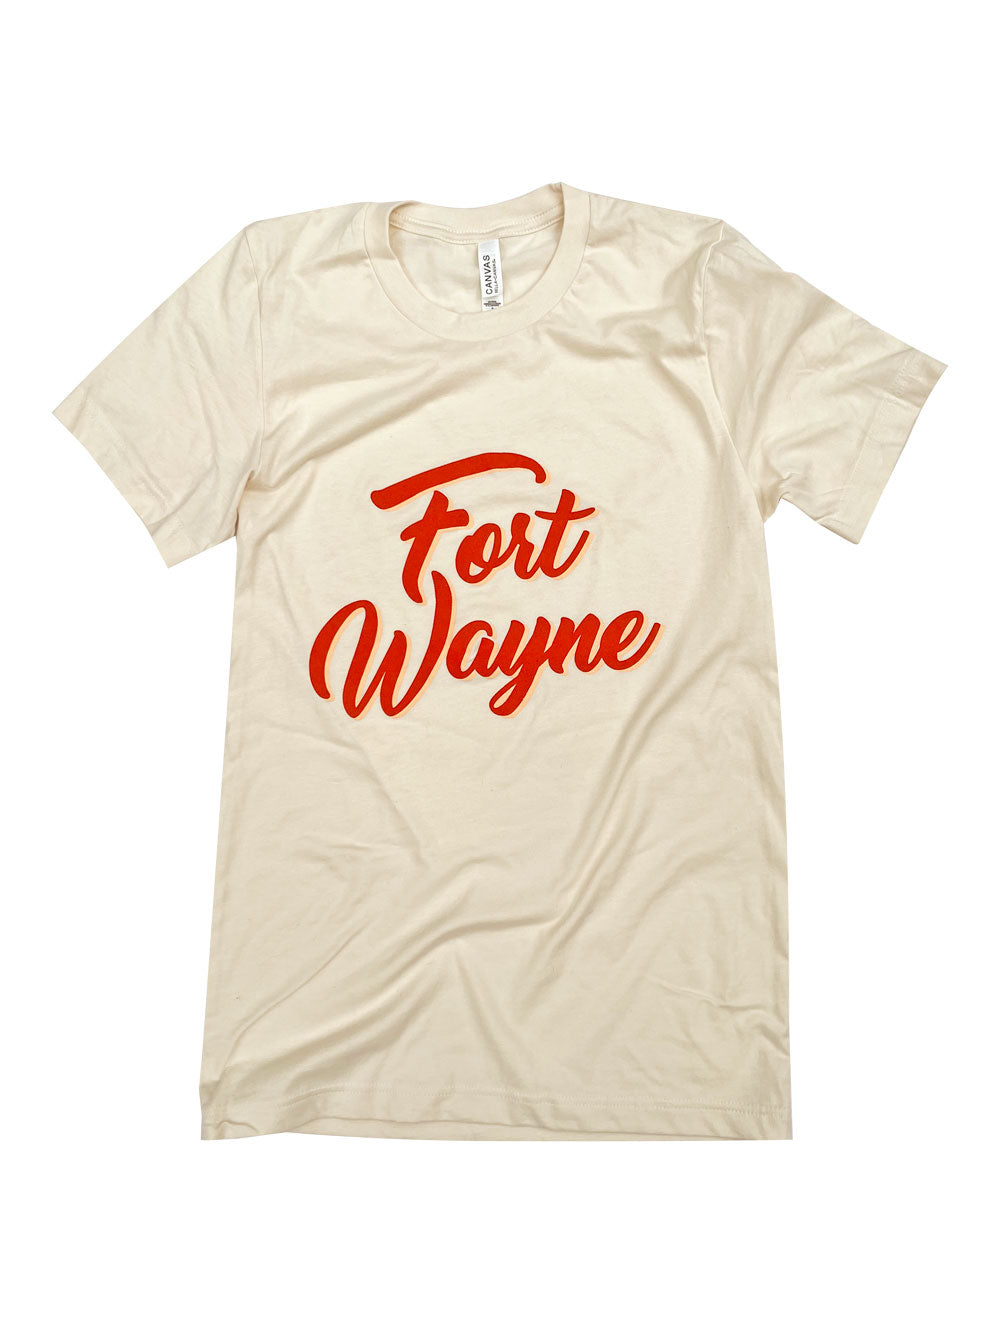 Orange ink Script Fort Wayne t-shirt